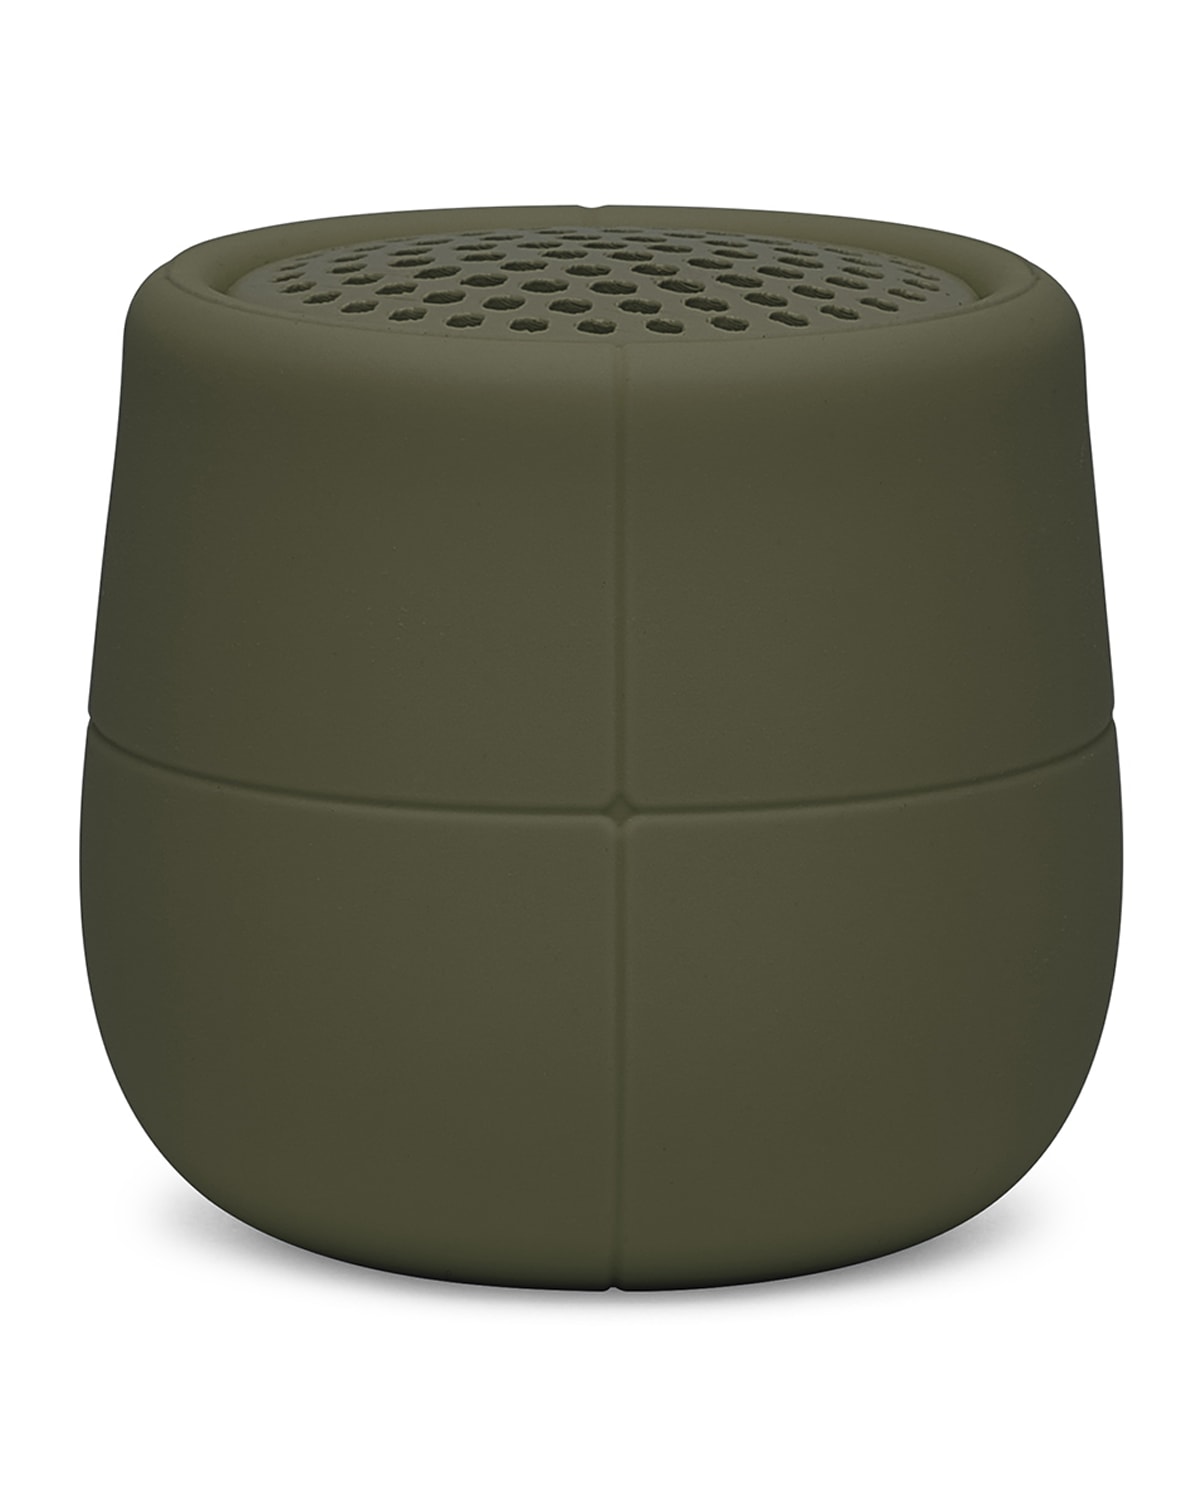 Lexon Design Mino X Water Resistant Floating Bluetooth Speaker In Green